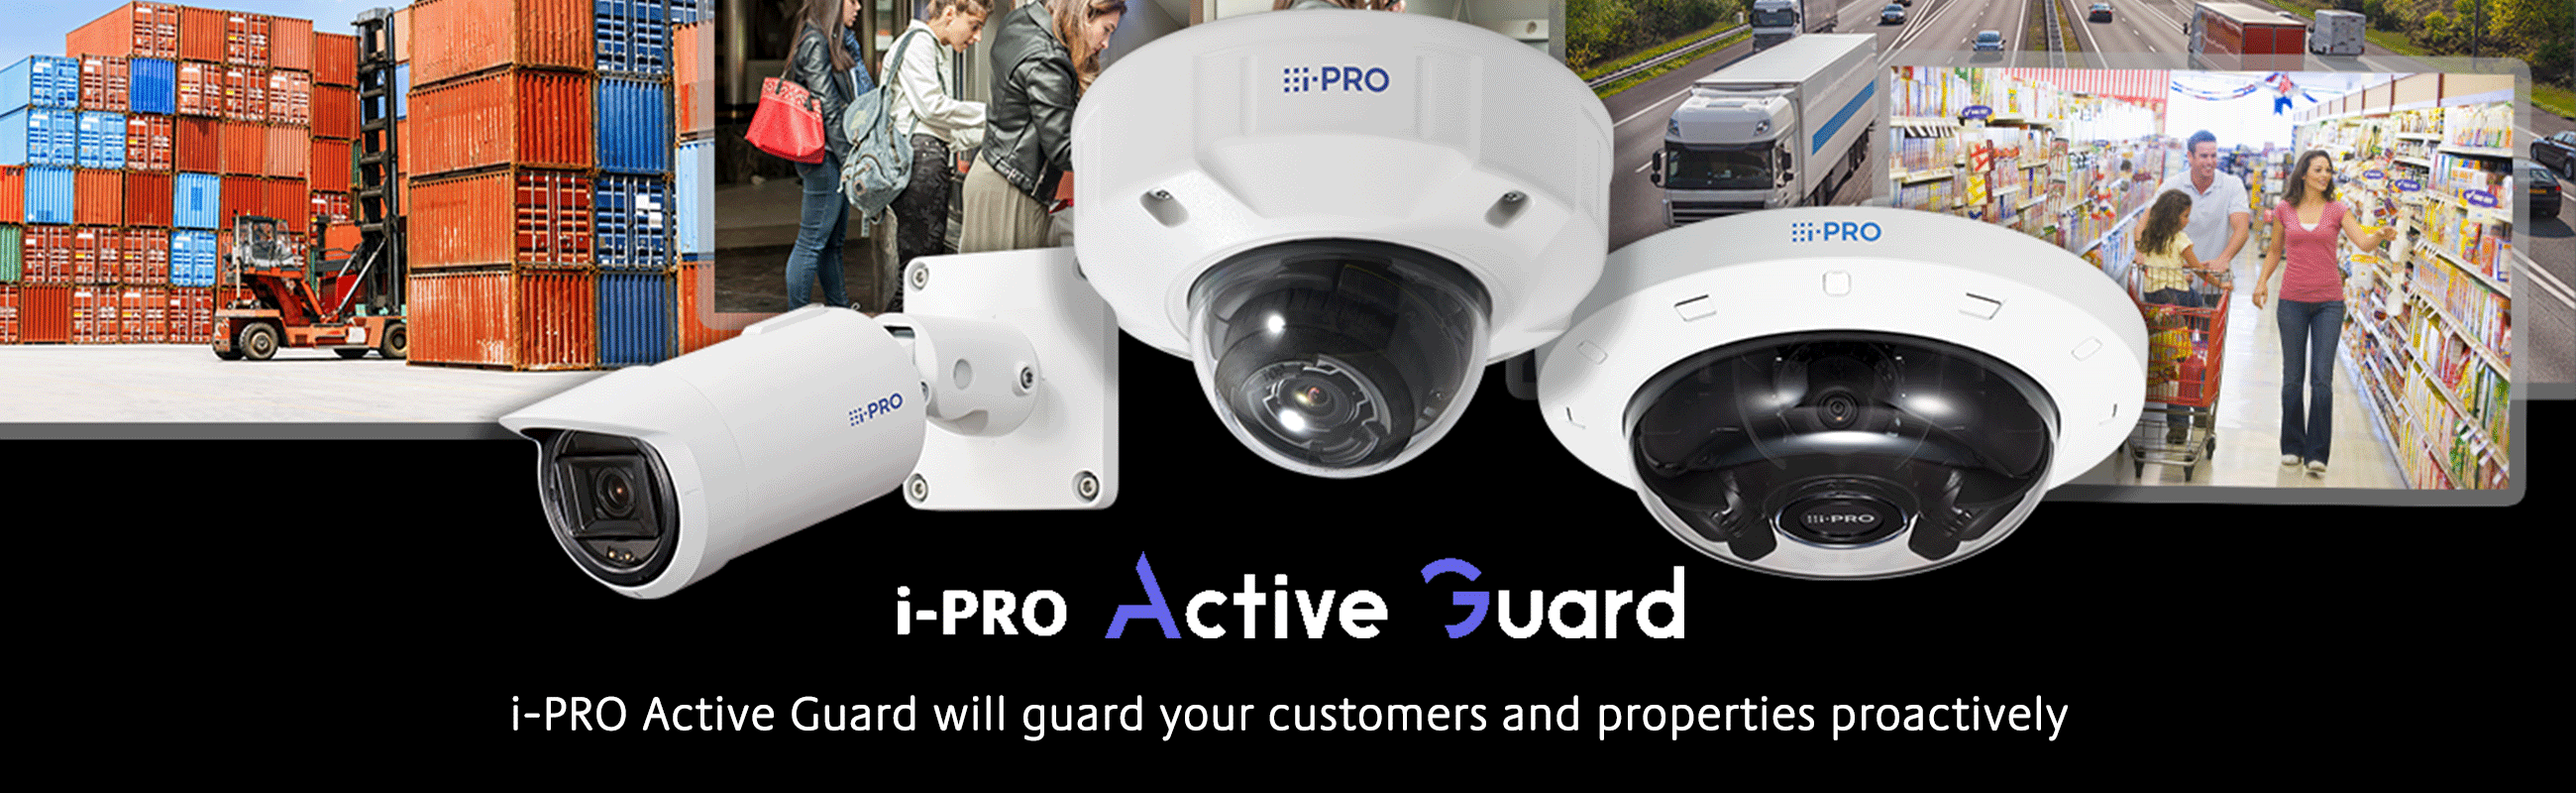 Surveillance i-PRO Products